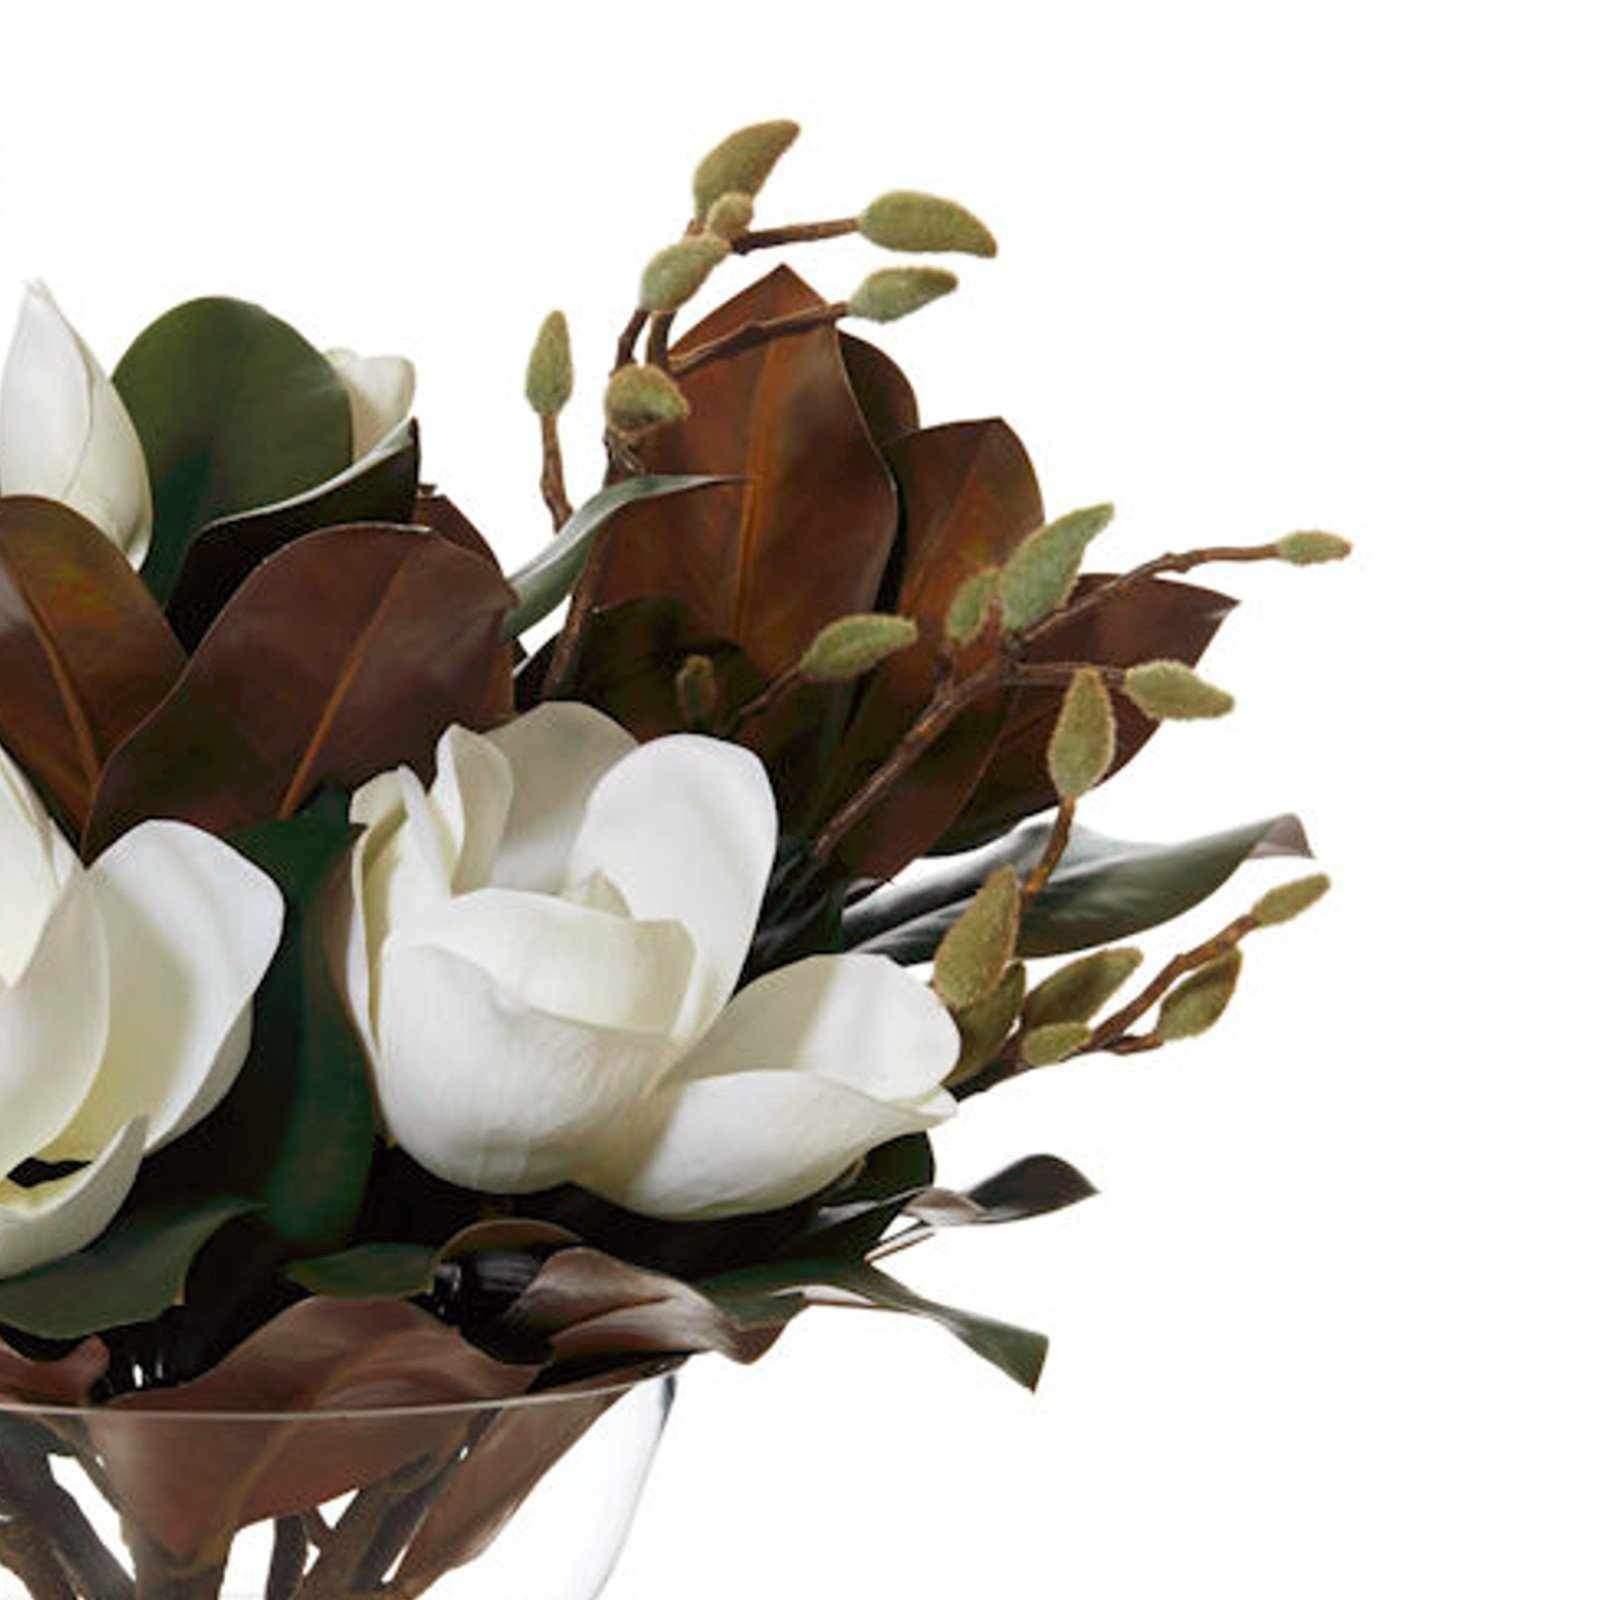 Magnolia Mix with Dahlia Bowl - Artificial Flower Arrangement-artificial flowers and plants-Chef's Quality Cookware